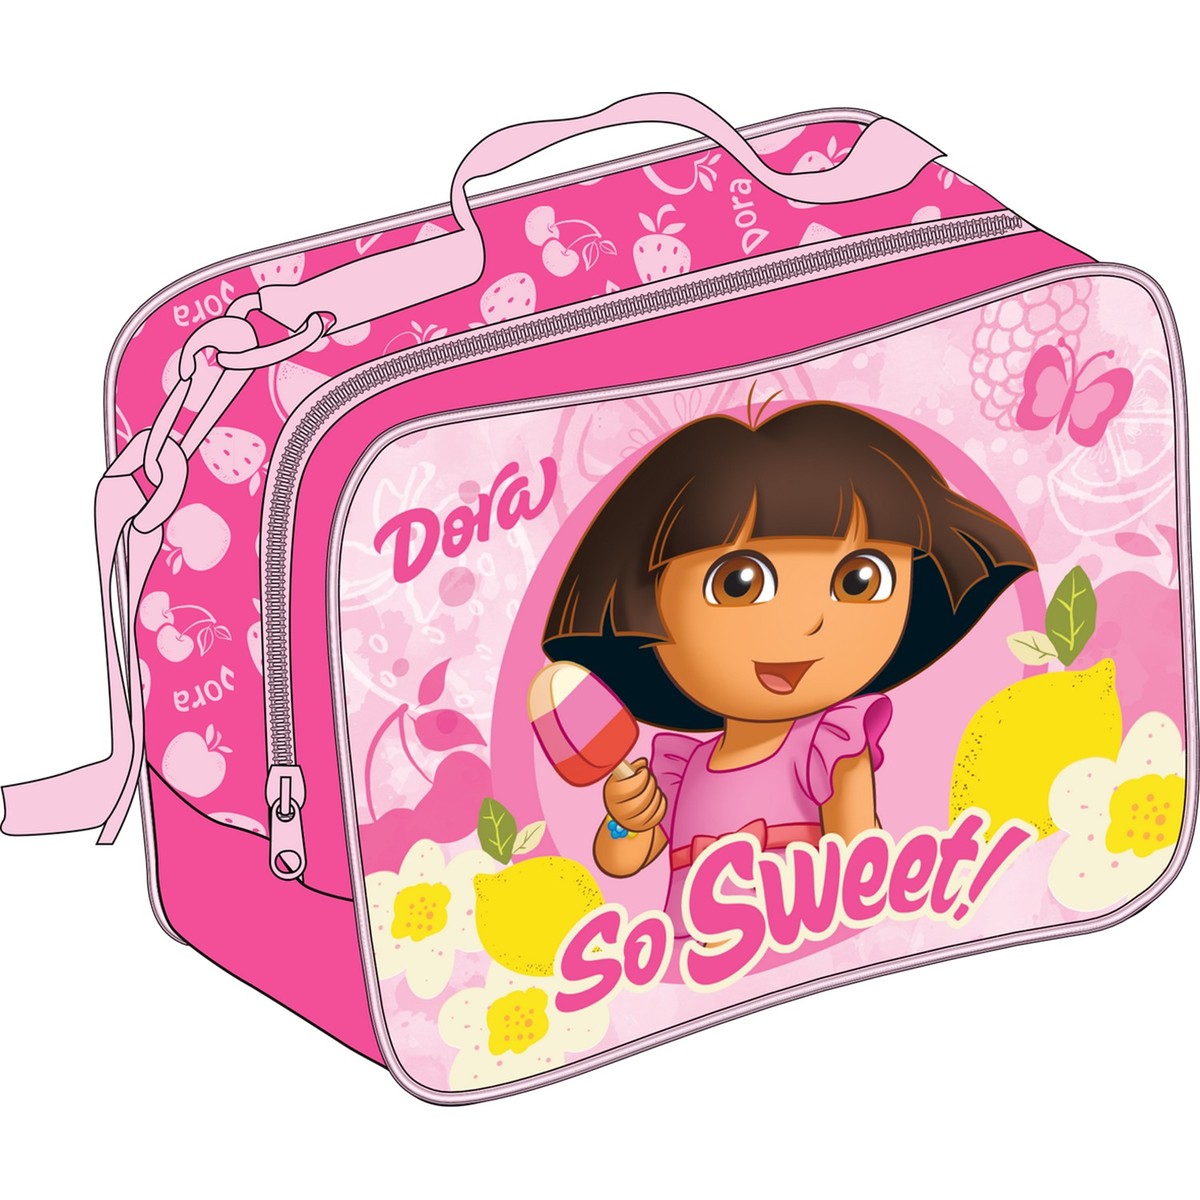 Dora The Explorer School Trolley Value Pack Set of 5Pcs FK160529 16inch